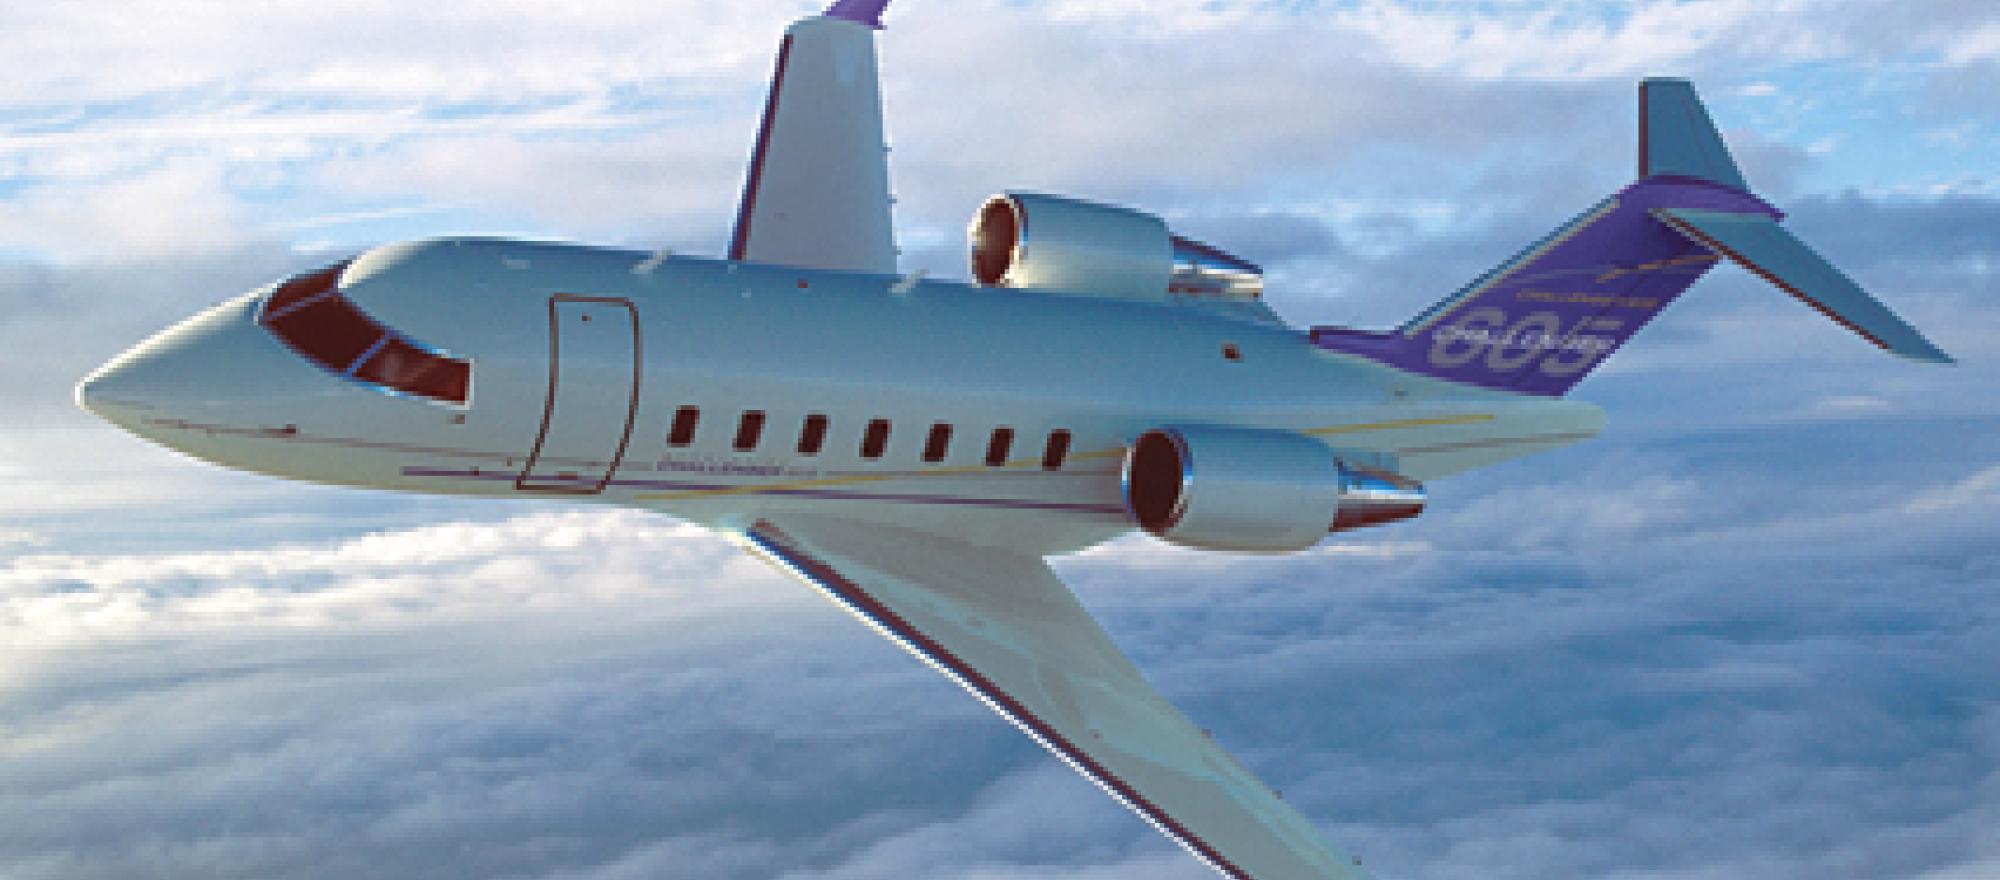 The wide-cabin Challenger 605 updates a venerable member of Bombardier’s flee